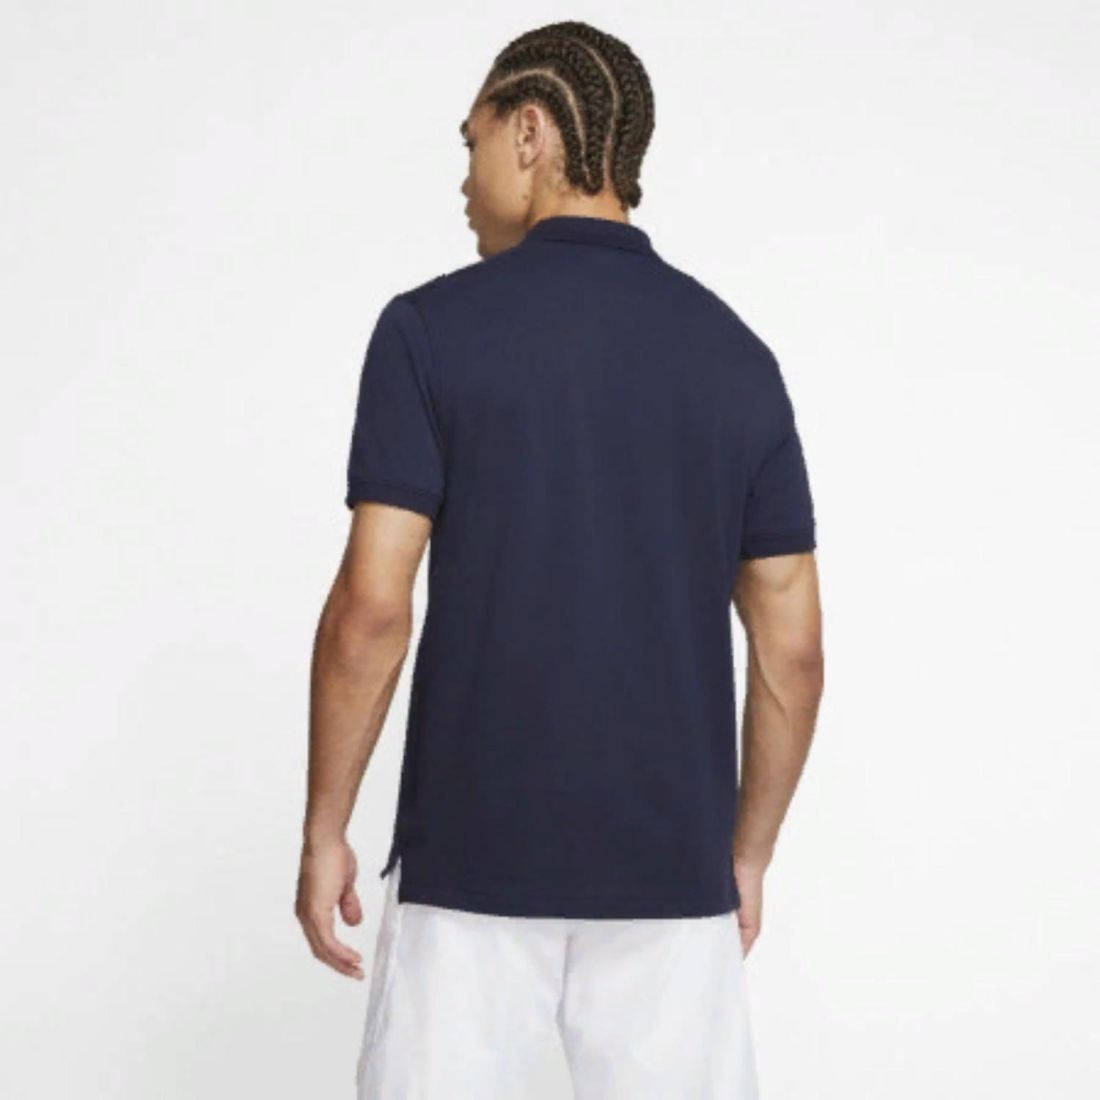 Стильная мужская футболка The Nike Polo